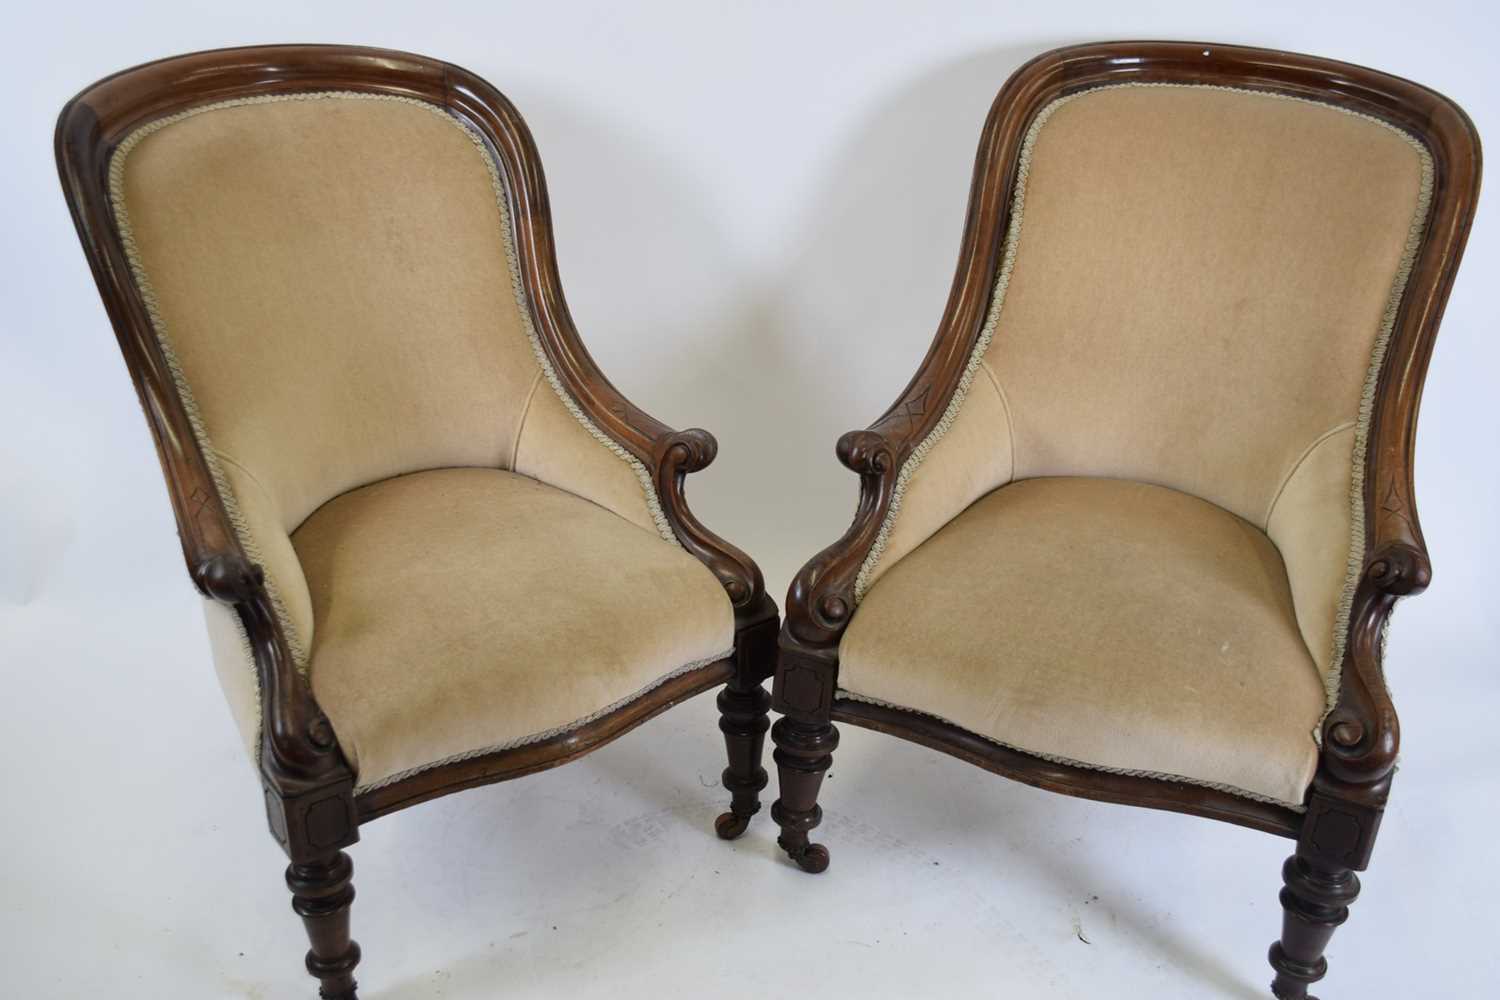 Near pair of Victorian mahogany framed armchairs upholstered in mushroom fabric raised on turned